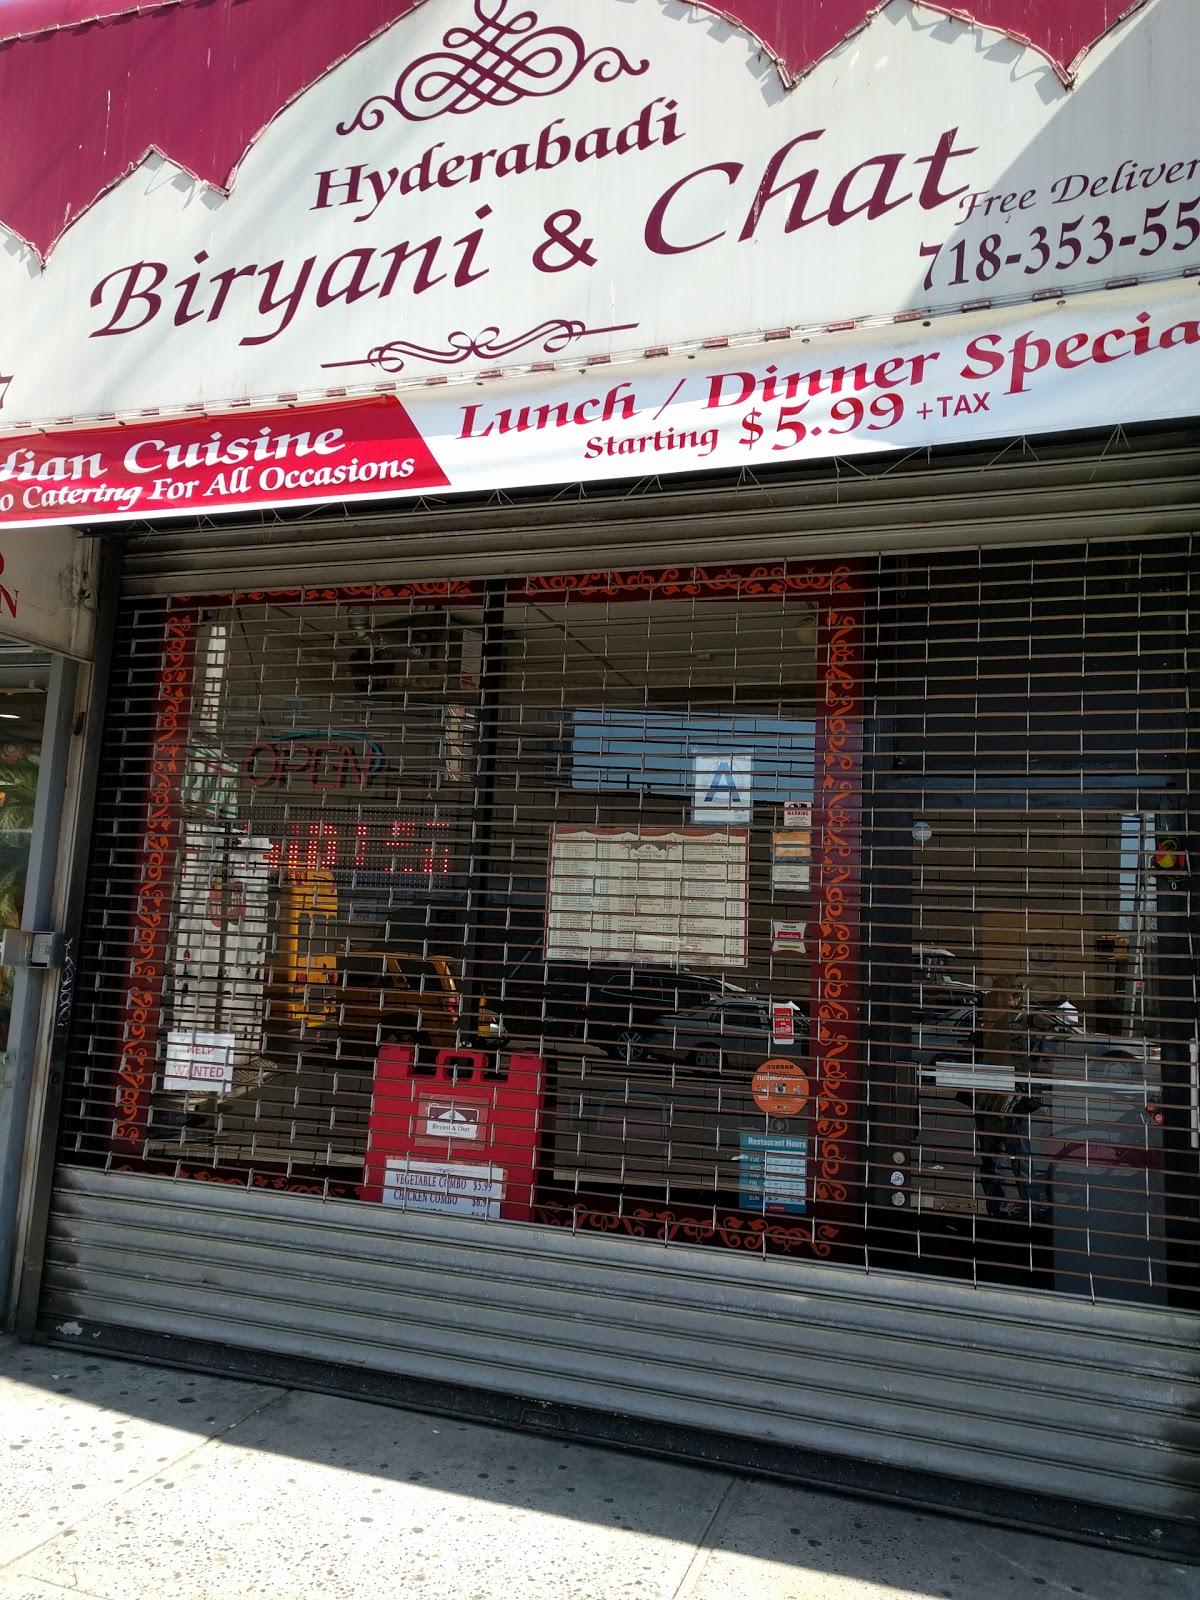 Photo of Hyderabadi Biryani & Chat in Queens City, New York, United States - 3 Picture of Restaurant, Food, Point of interest, Establishment